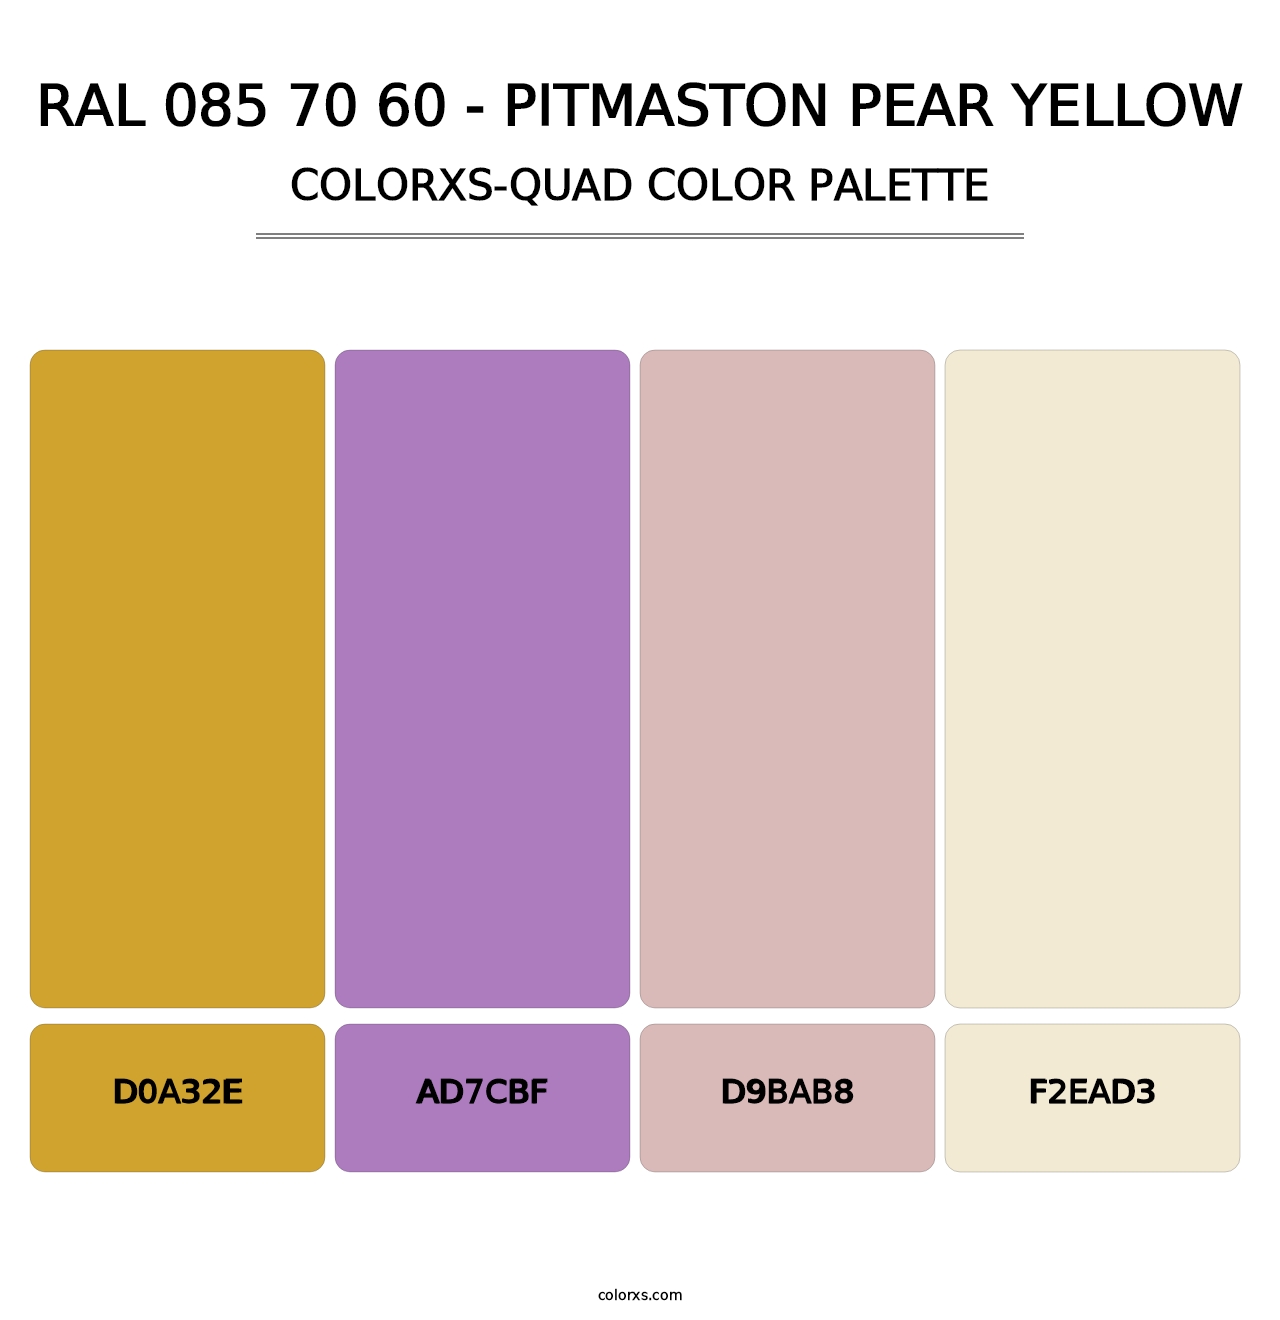 RAL 085 70 60 - Pitmaston Pear Yellow - Colorxs Quad Palette